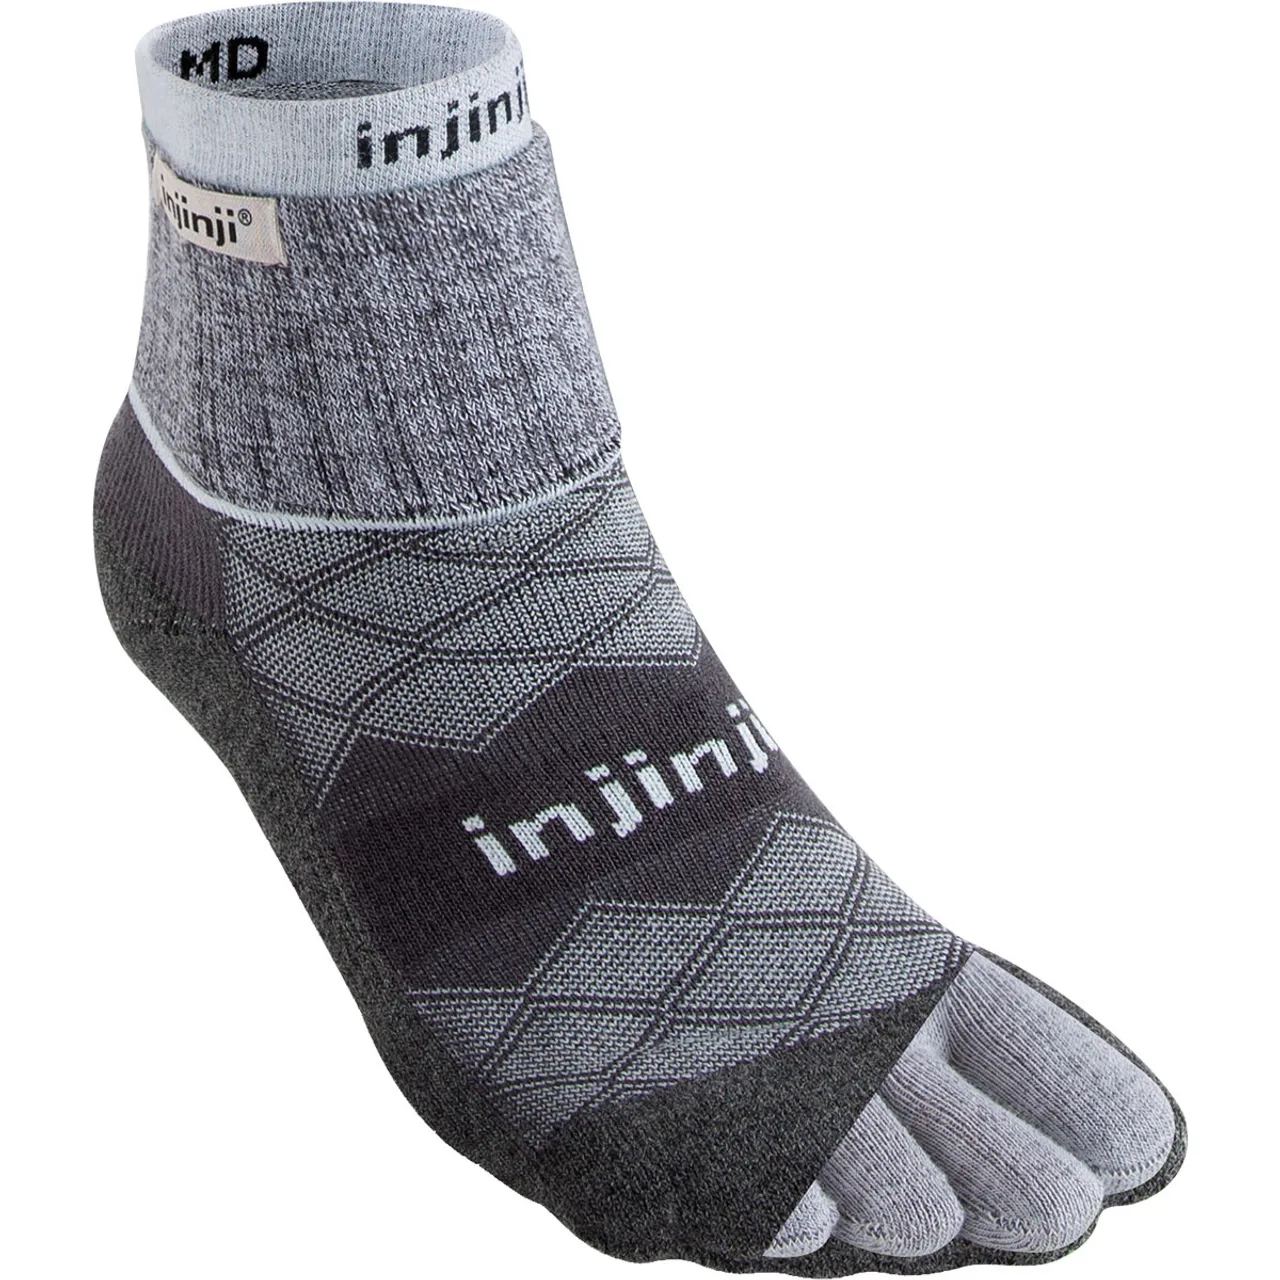 Injinji Damen Liner + Runner Mini-Crew Socken